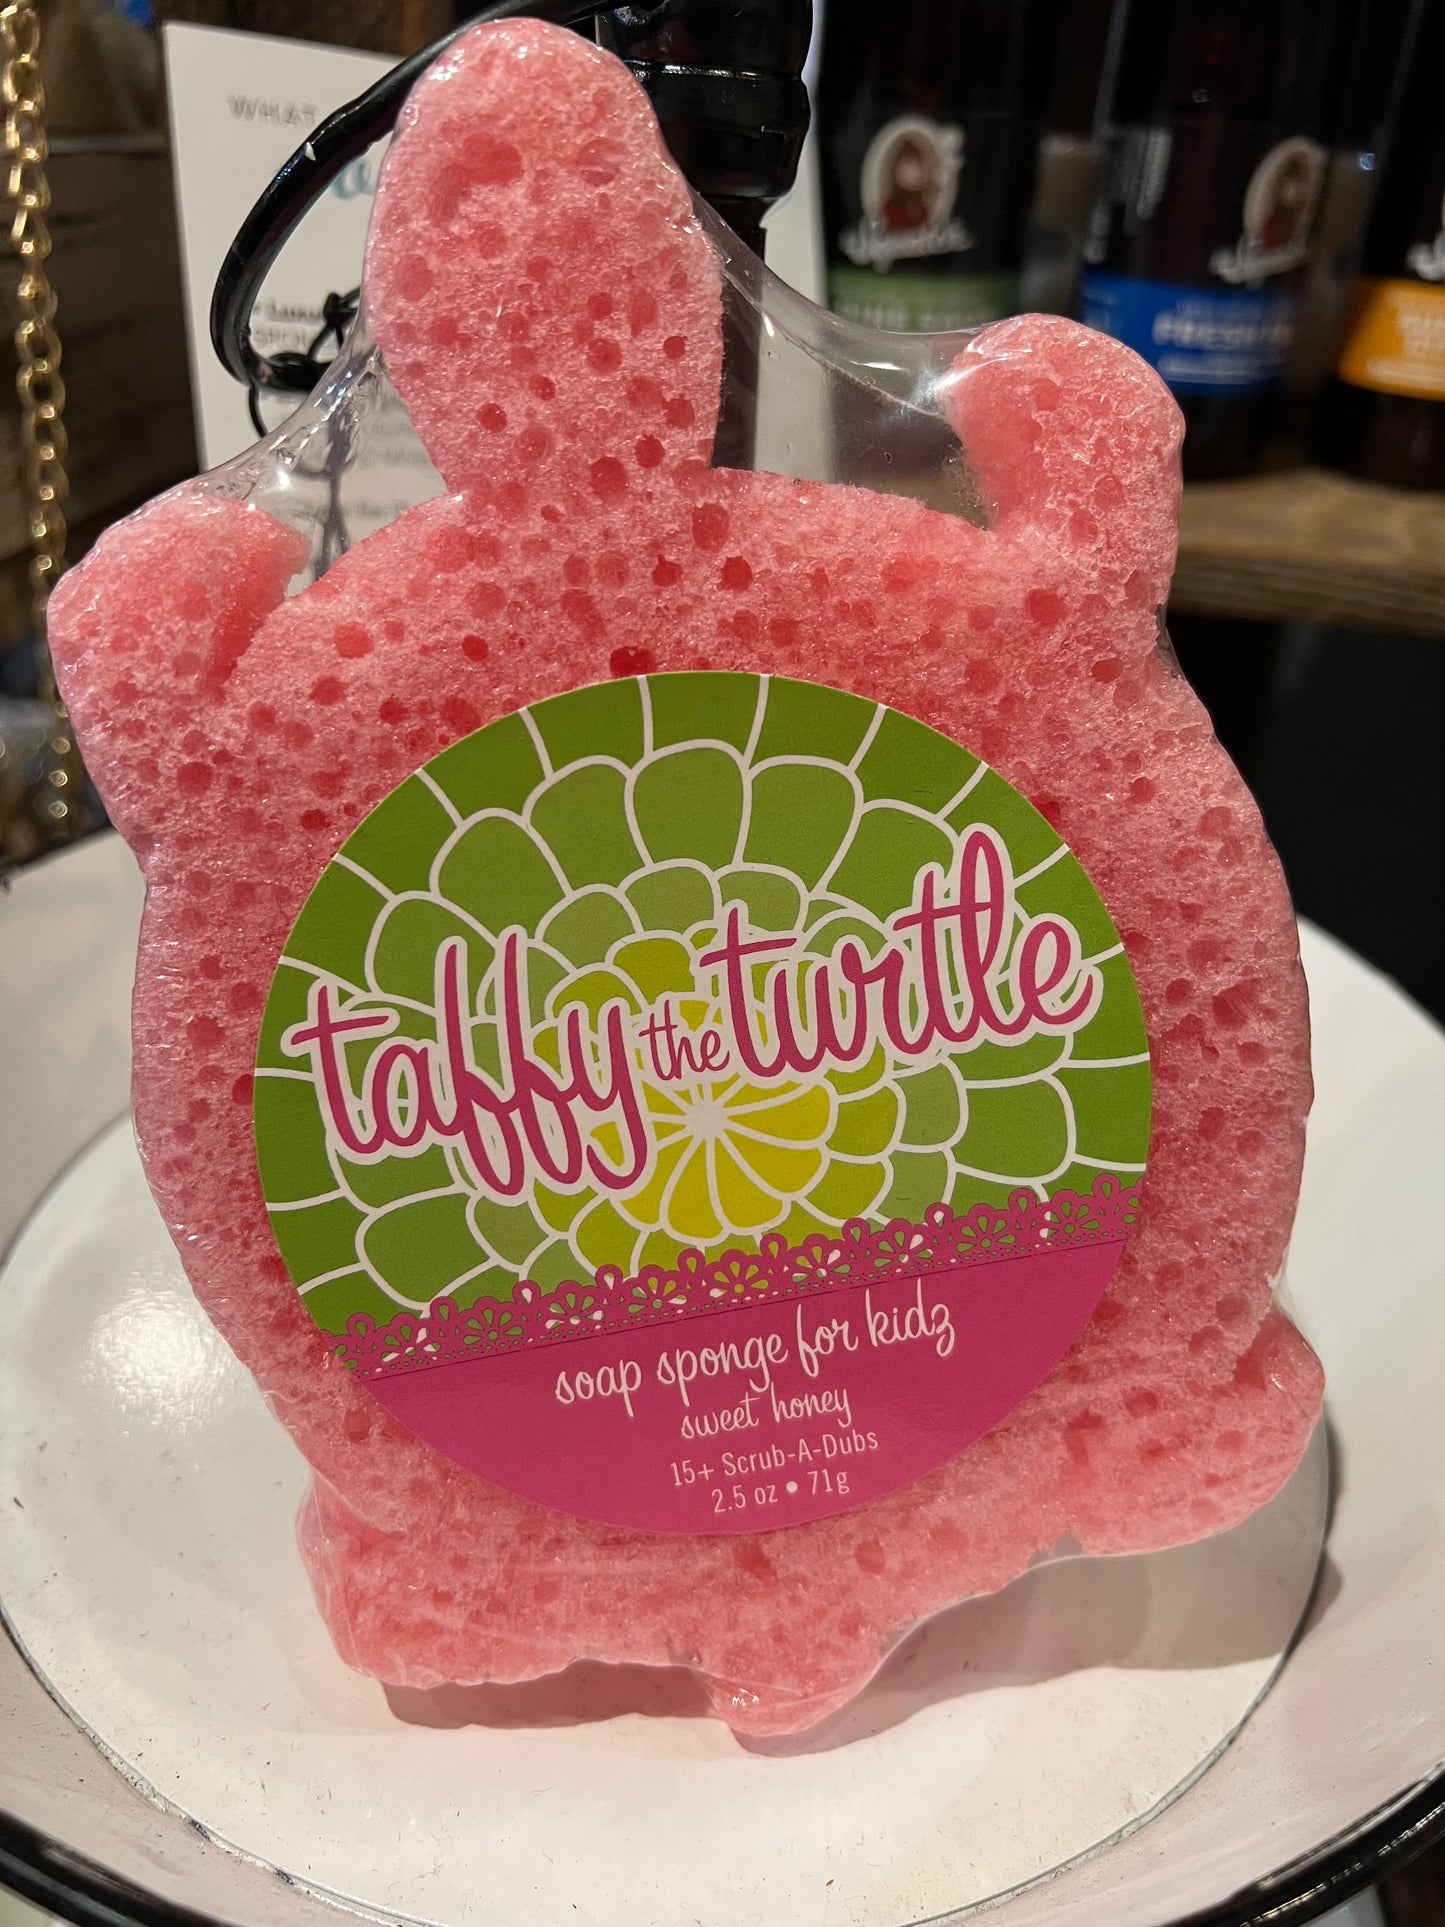 Caren "Taffy the Turtle" soap sponge for kids shaped like a pink turtle.